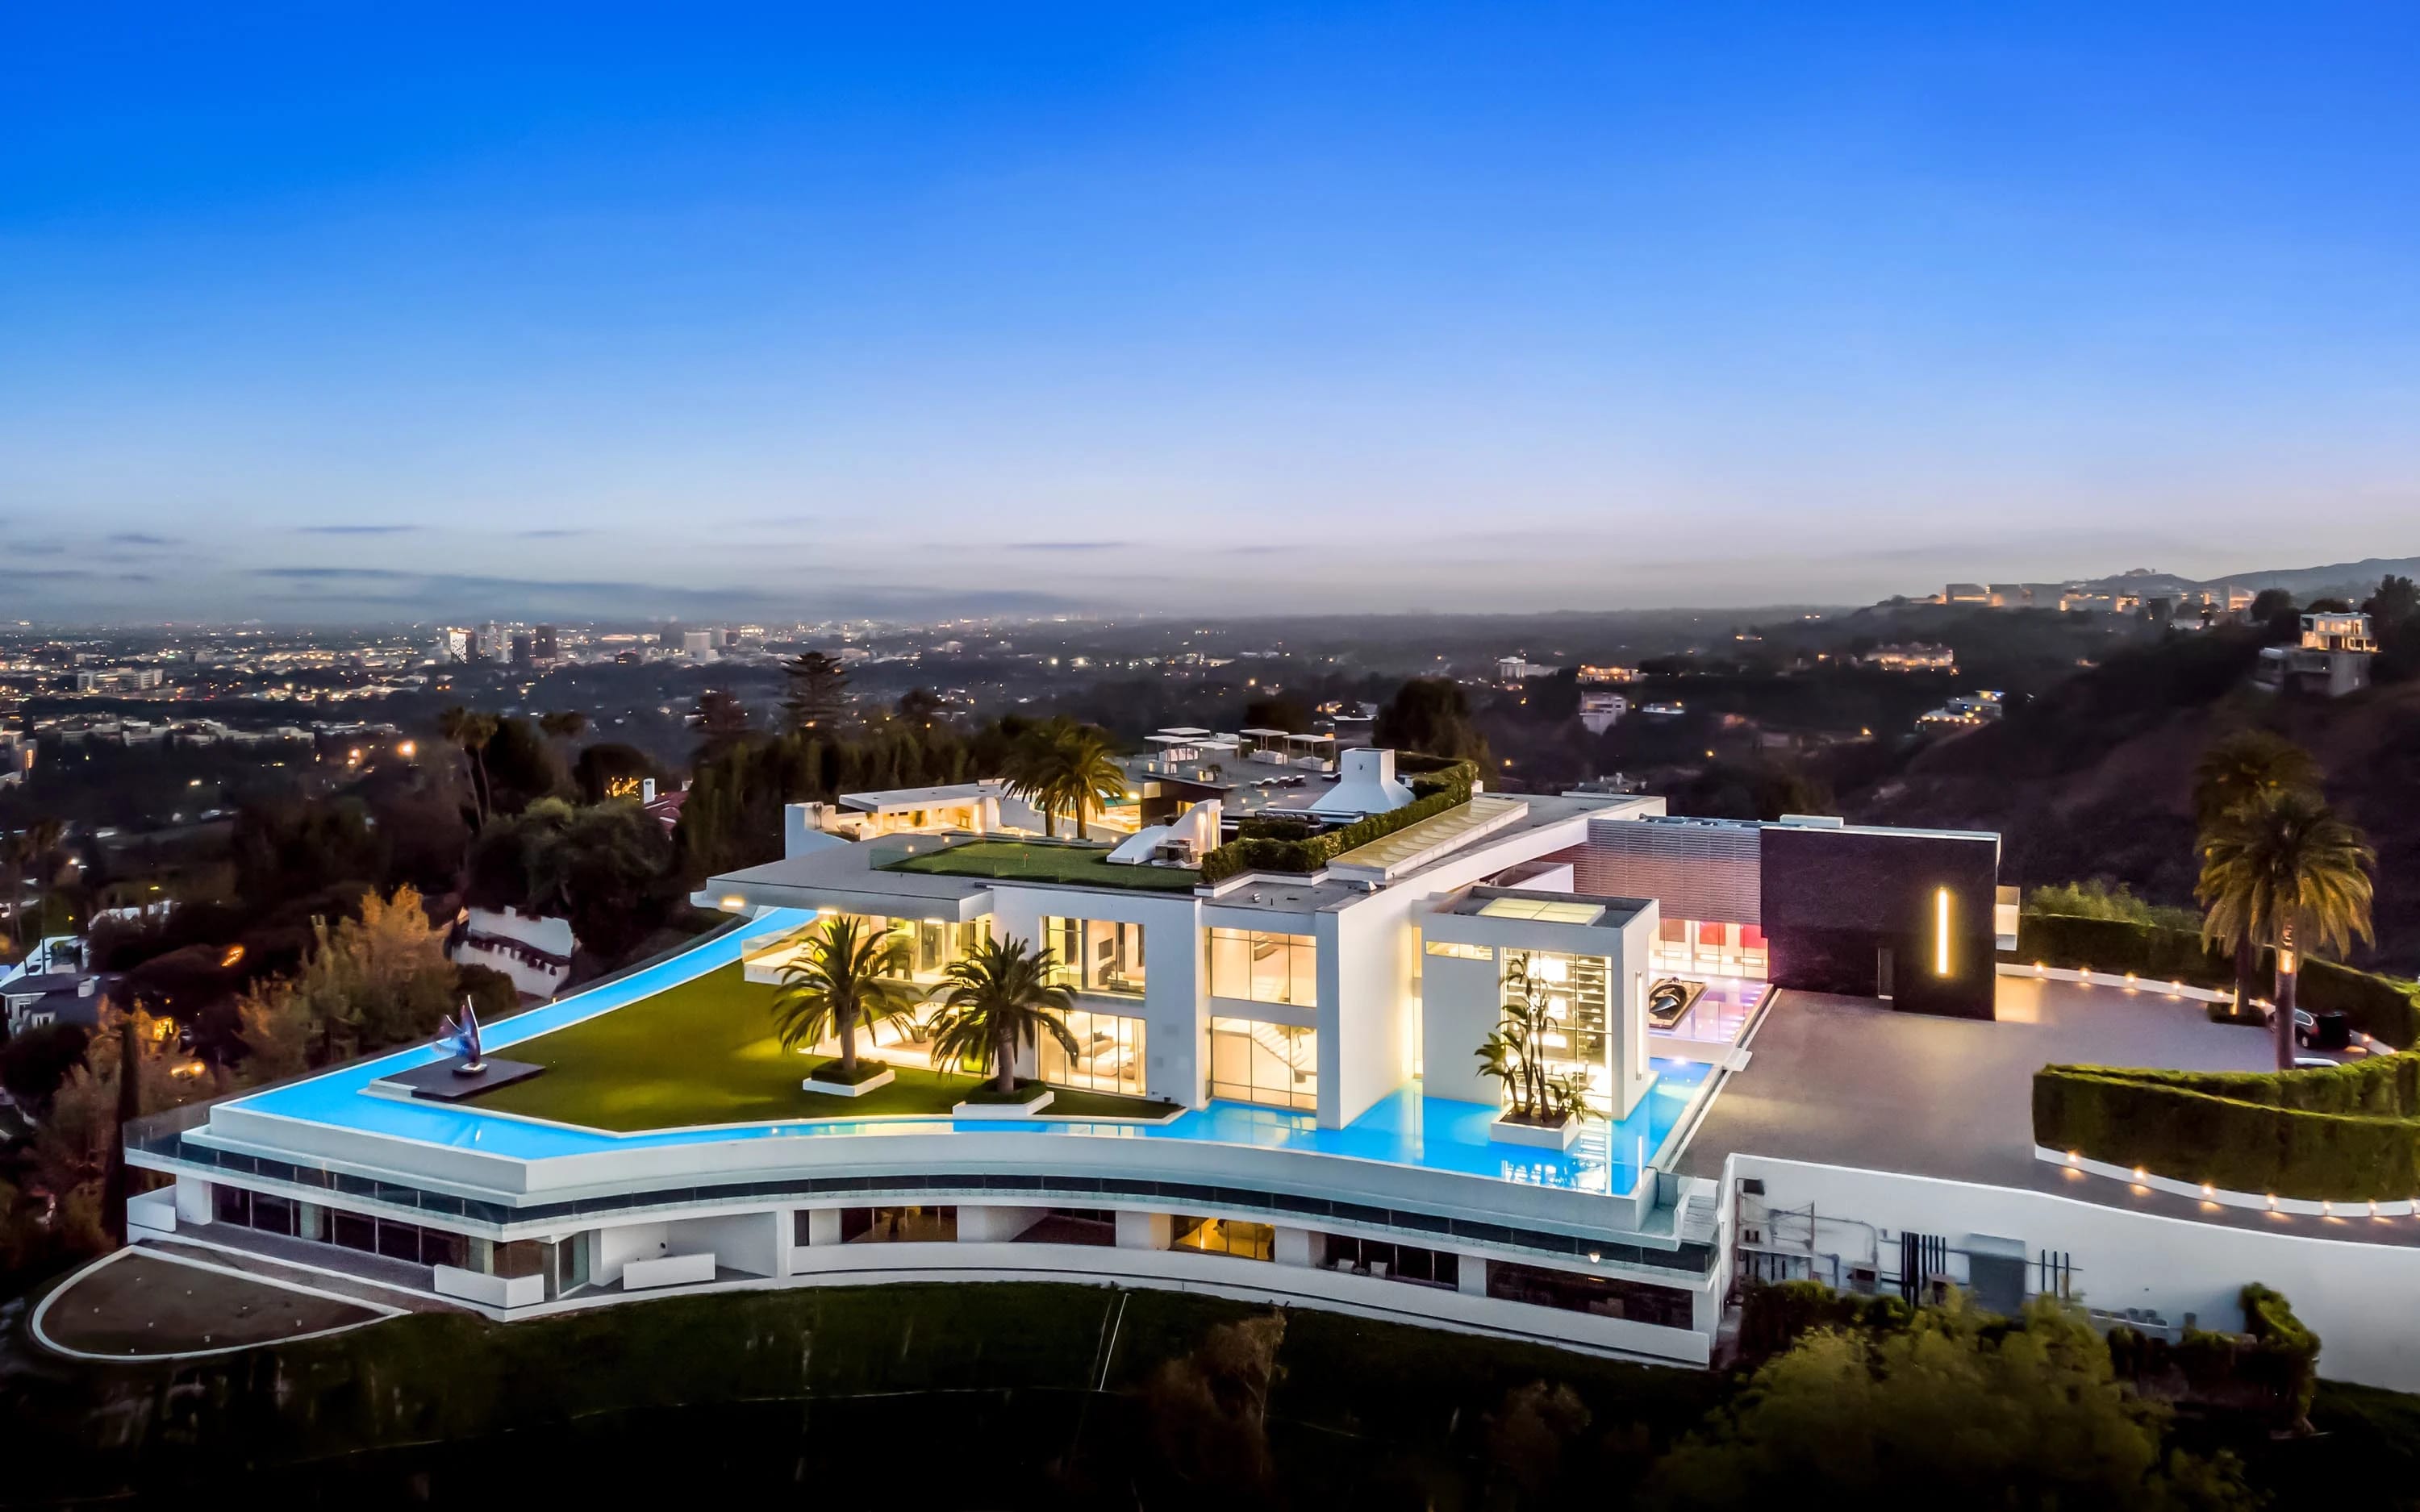 The One | Bel Air, Los Angeles, CA | Luxury Real Estate